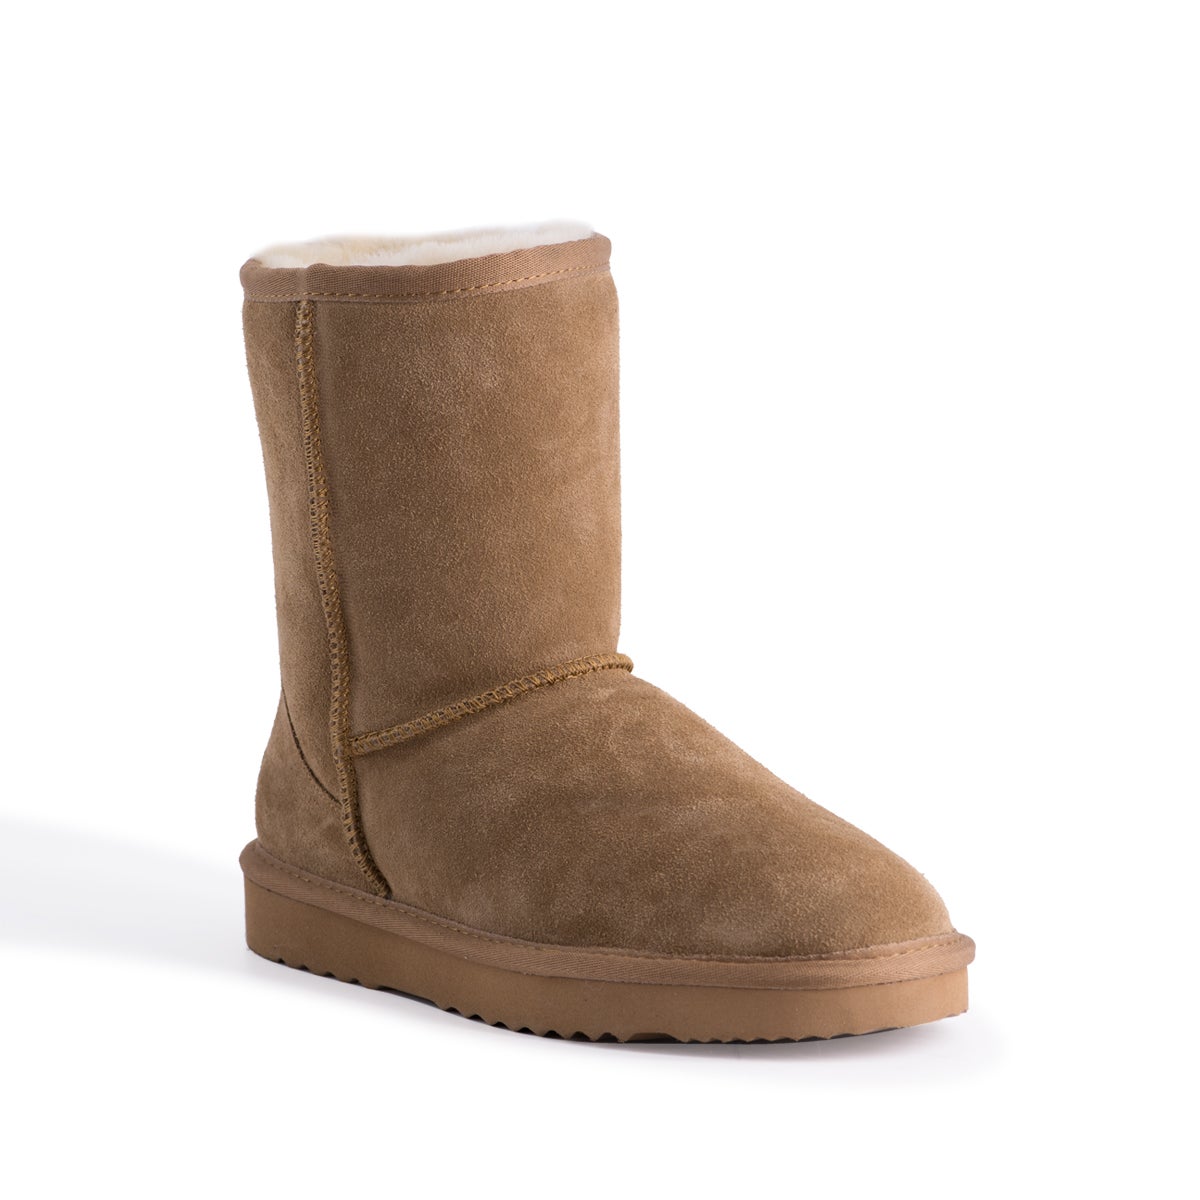 AUS WOOLI UGG MID CALF ZIP-UP SHEEPSKIN BOOT | Buy Women's UGG Boots ...